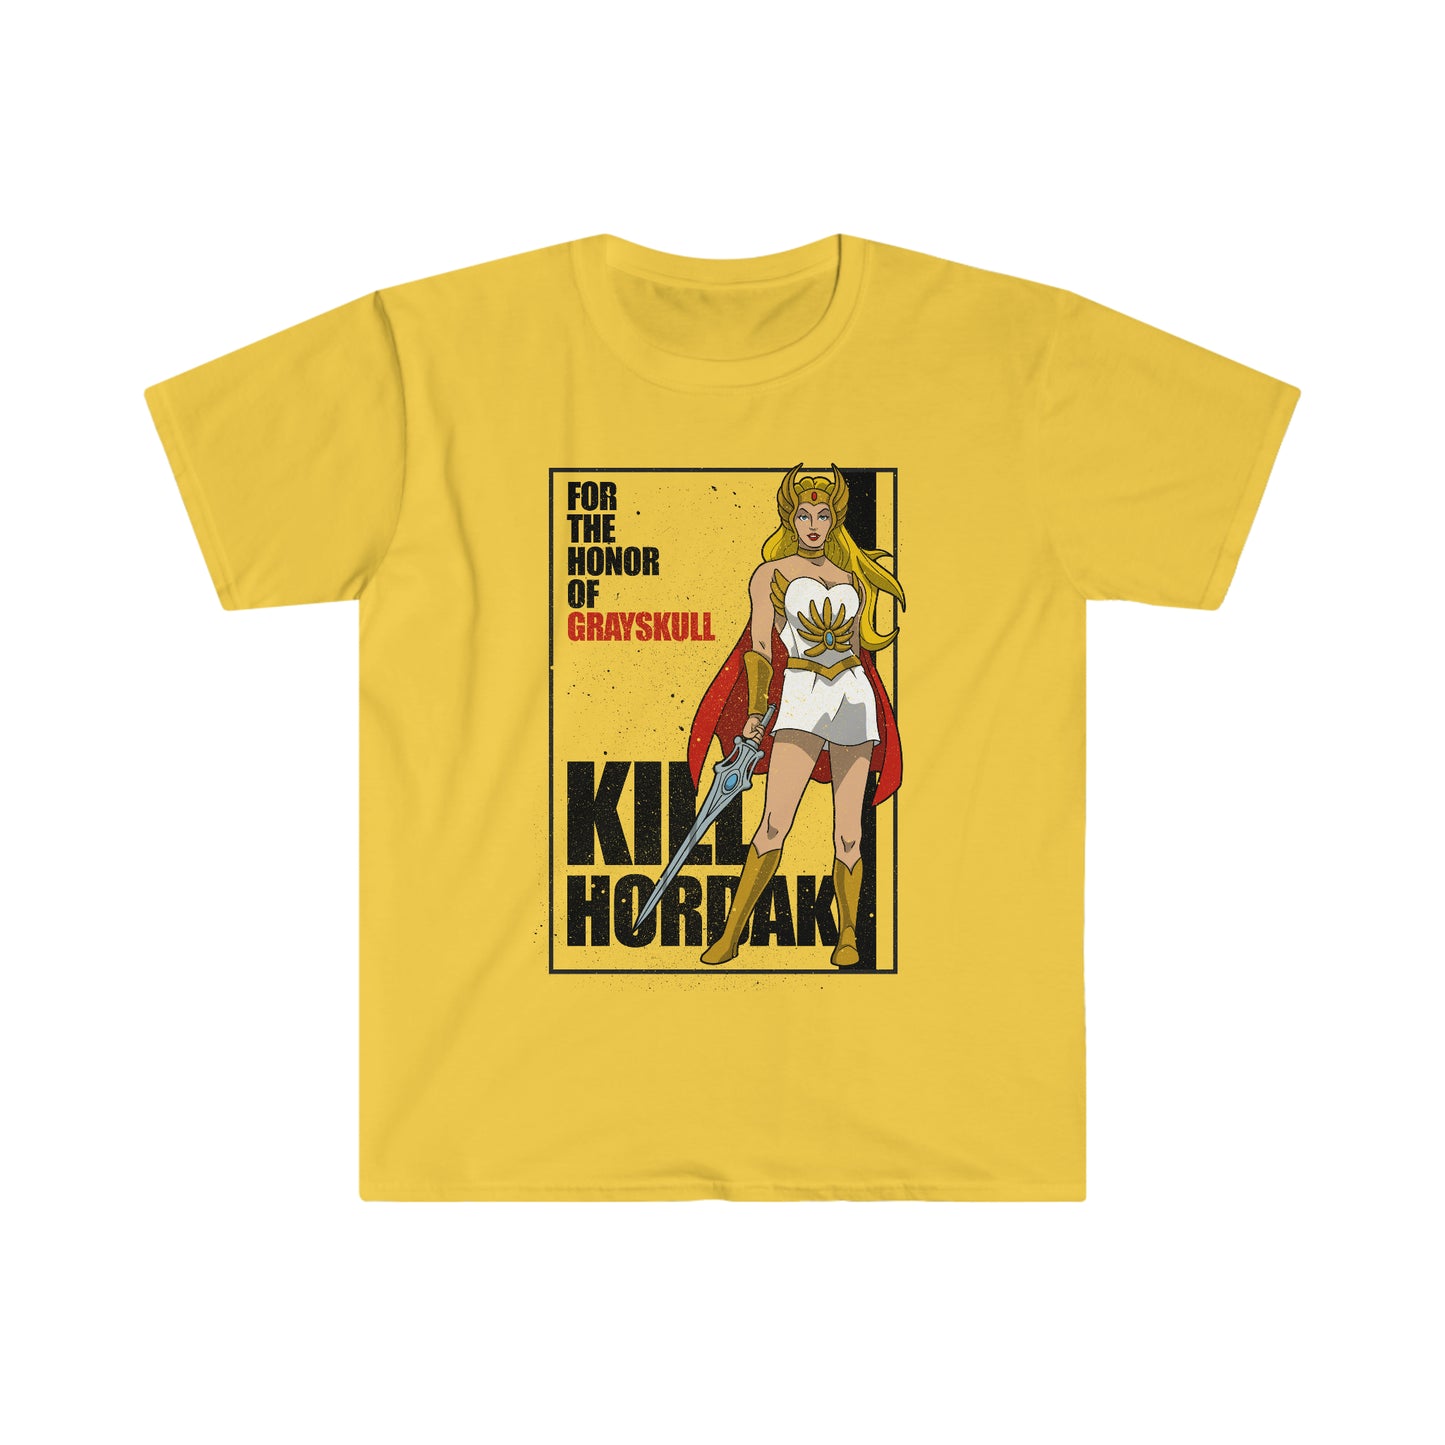 Kill Hordak t-shirt